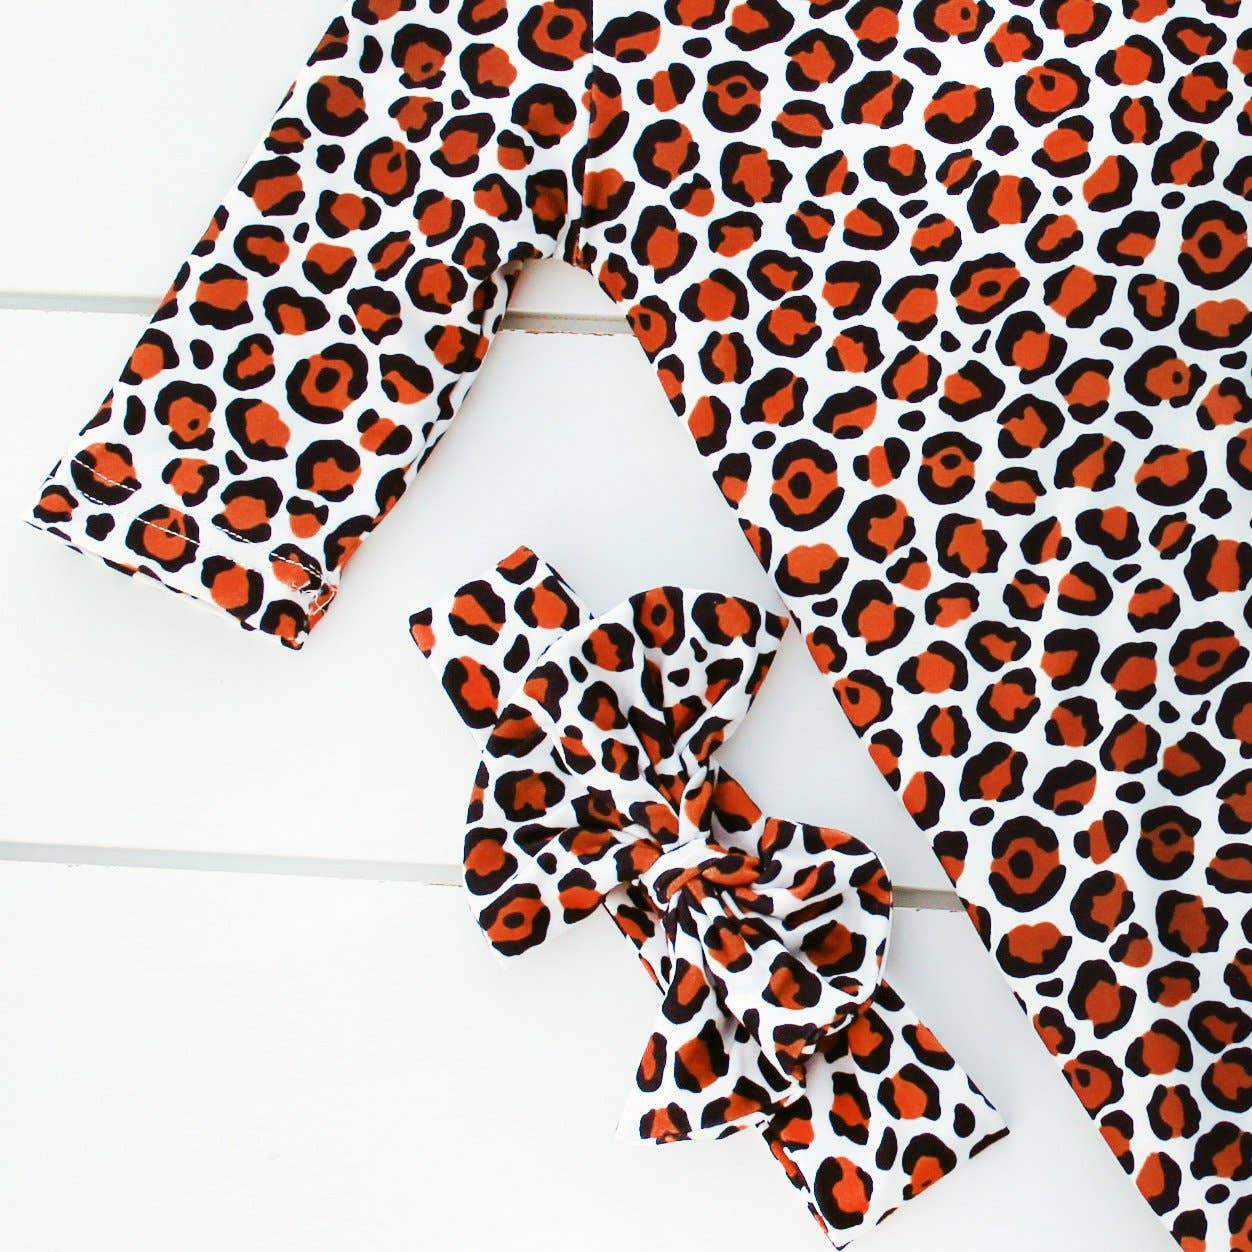 Leopard Baby Gown Set